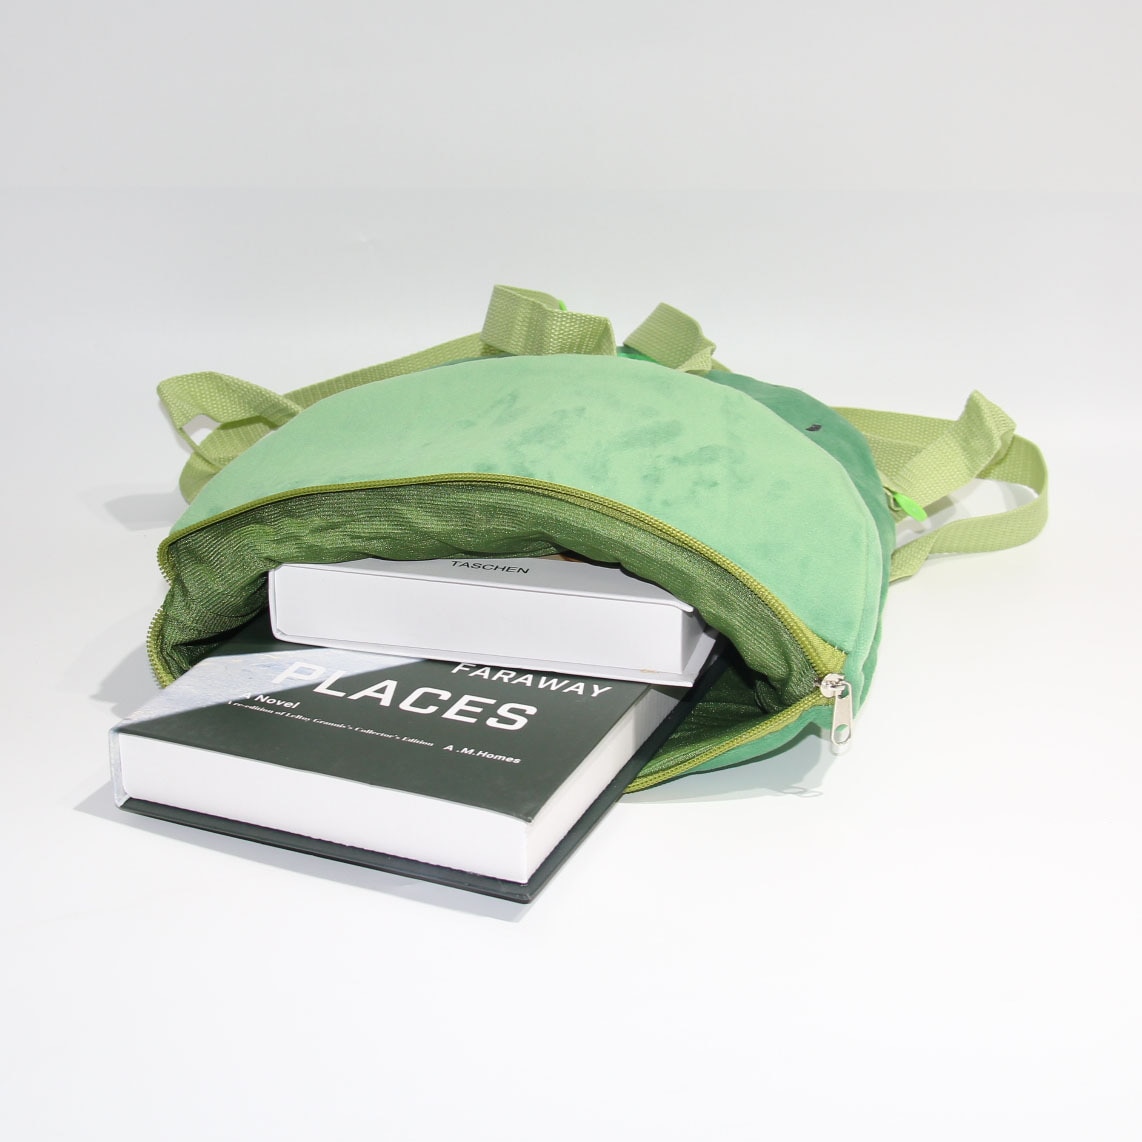 Cartoon Ricked Morties Figure Plush School Bag Green Cucumber Children's Backpack Funny Pickled Cucumber Student Bag 45cm